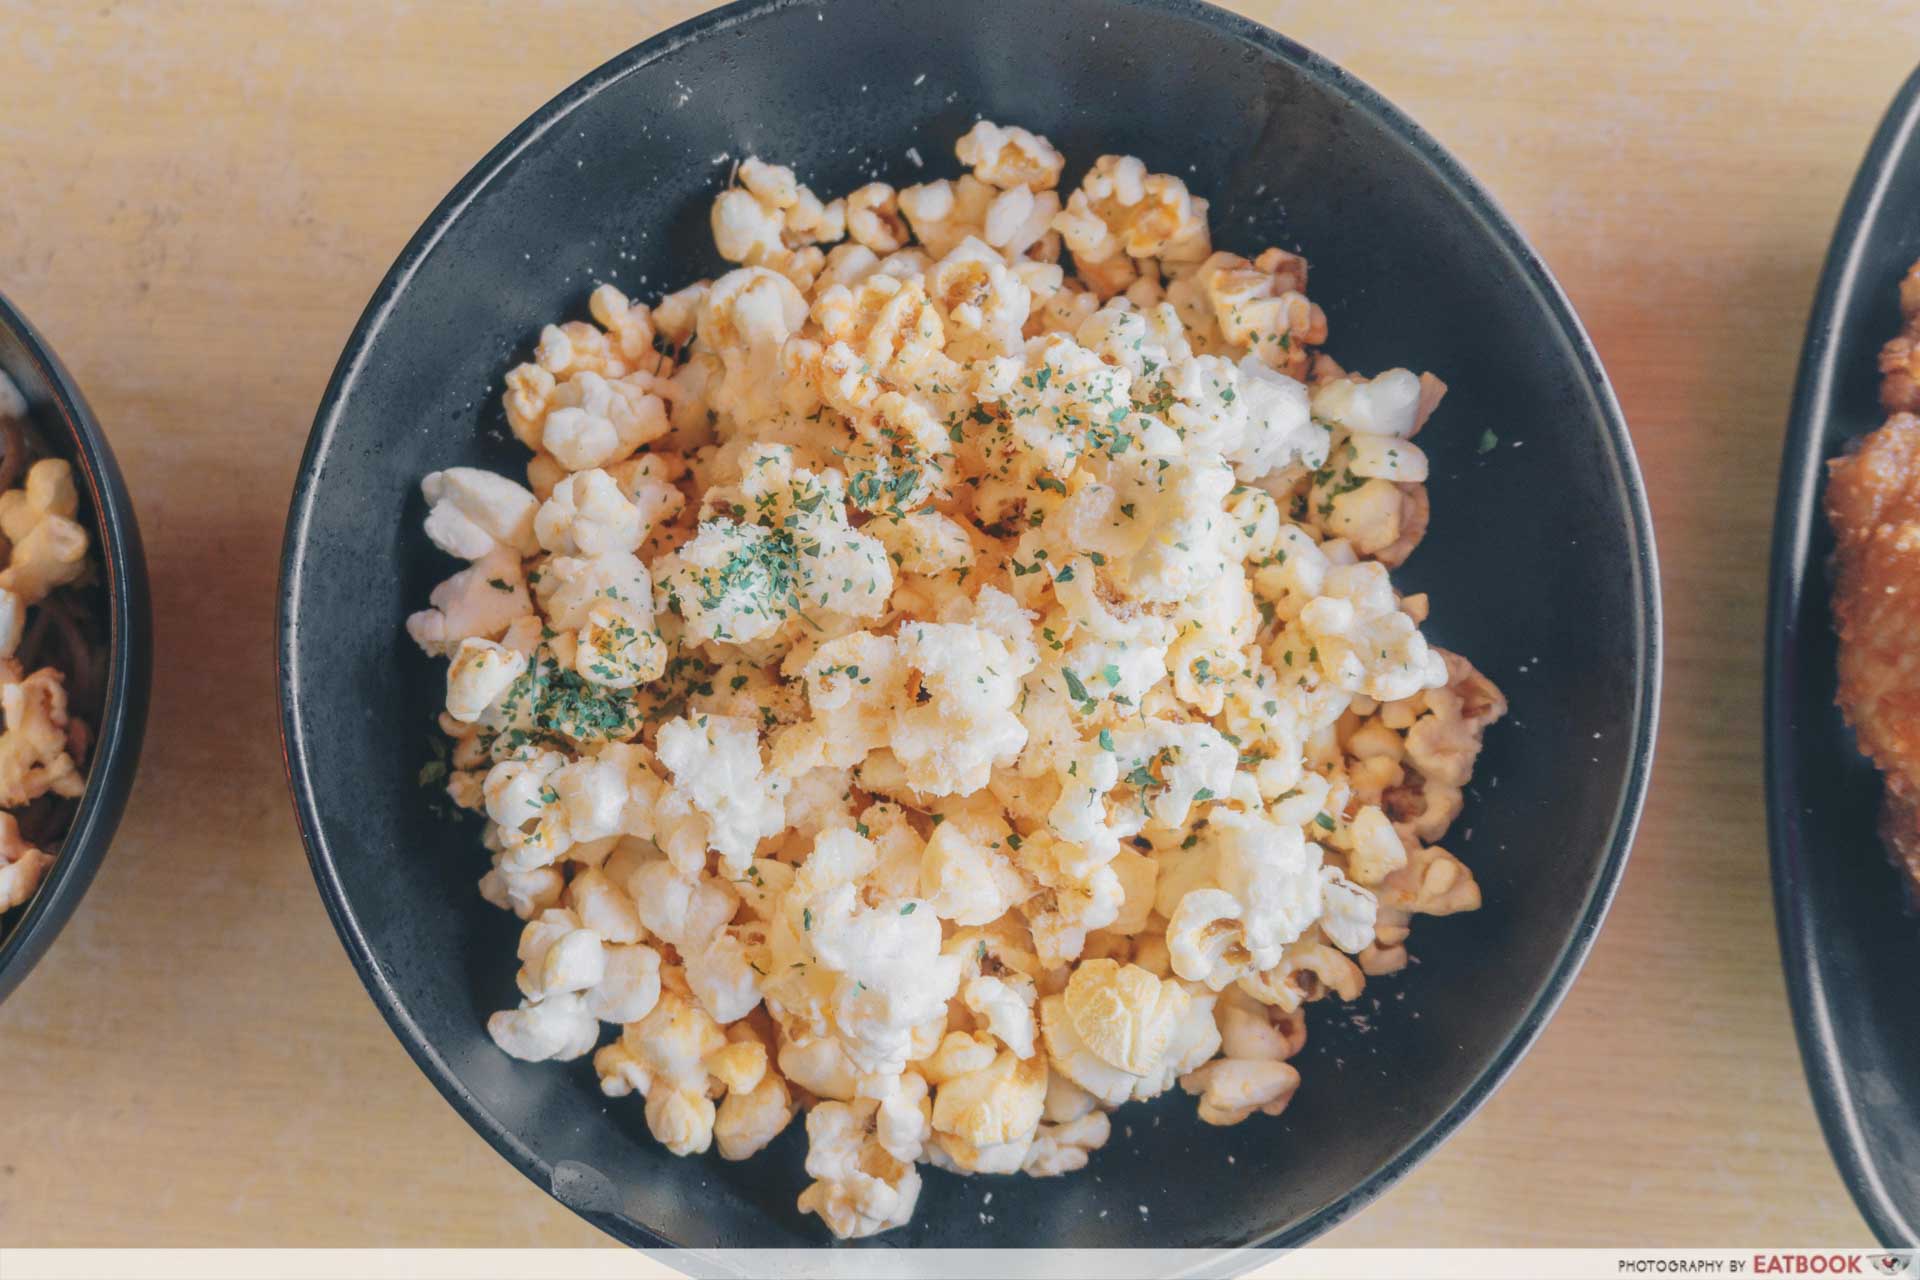 Indulge - truffle popcorn